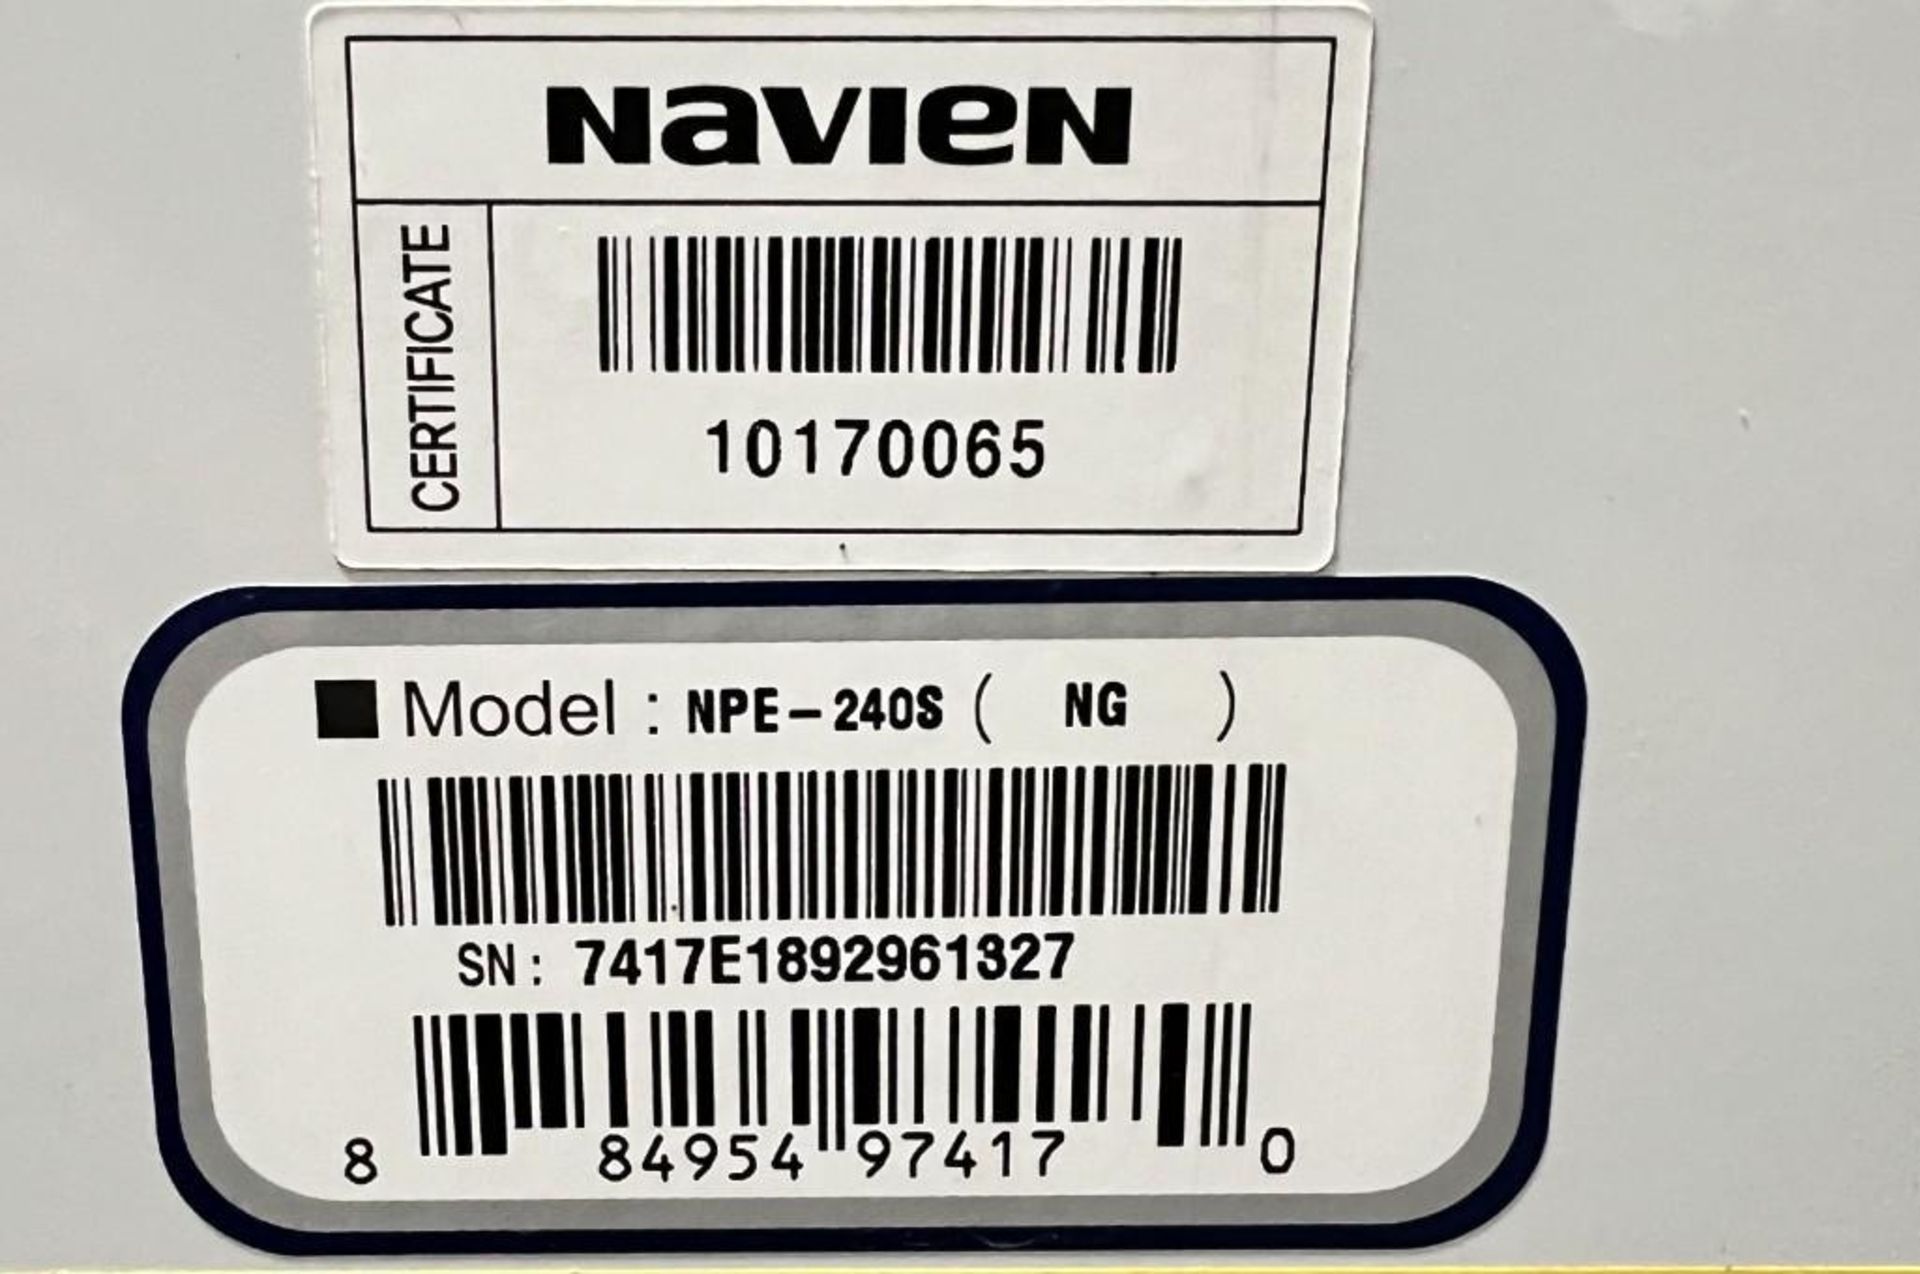 Navien Tankless Water Heater, Model NPE-240S, Serial# 7417E1892961327. - Image 3 of 4